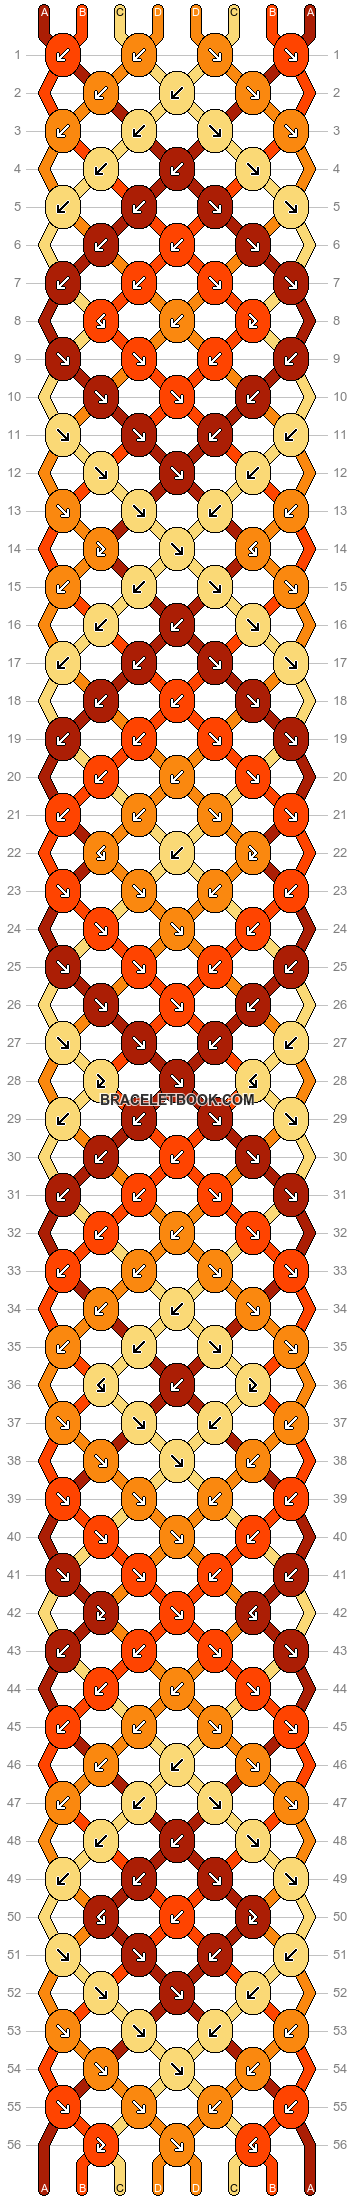 Normal pattern #28064 pattern